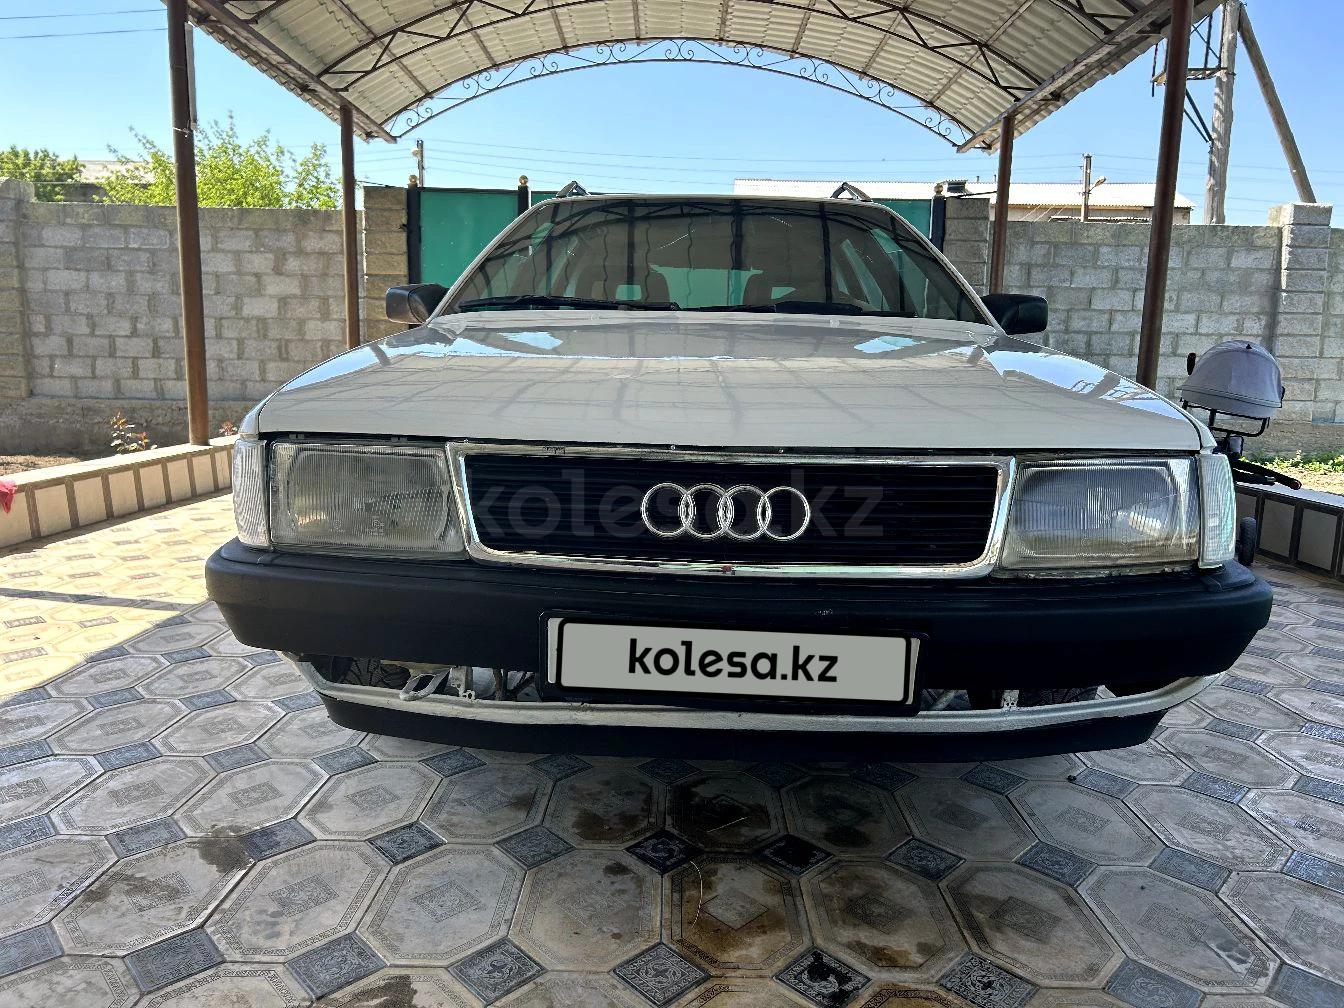 Audi 100 1989 г.